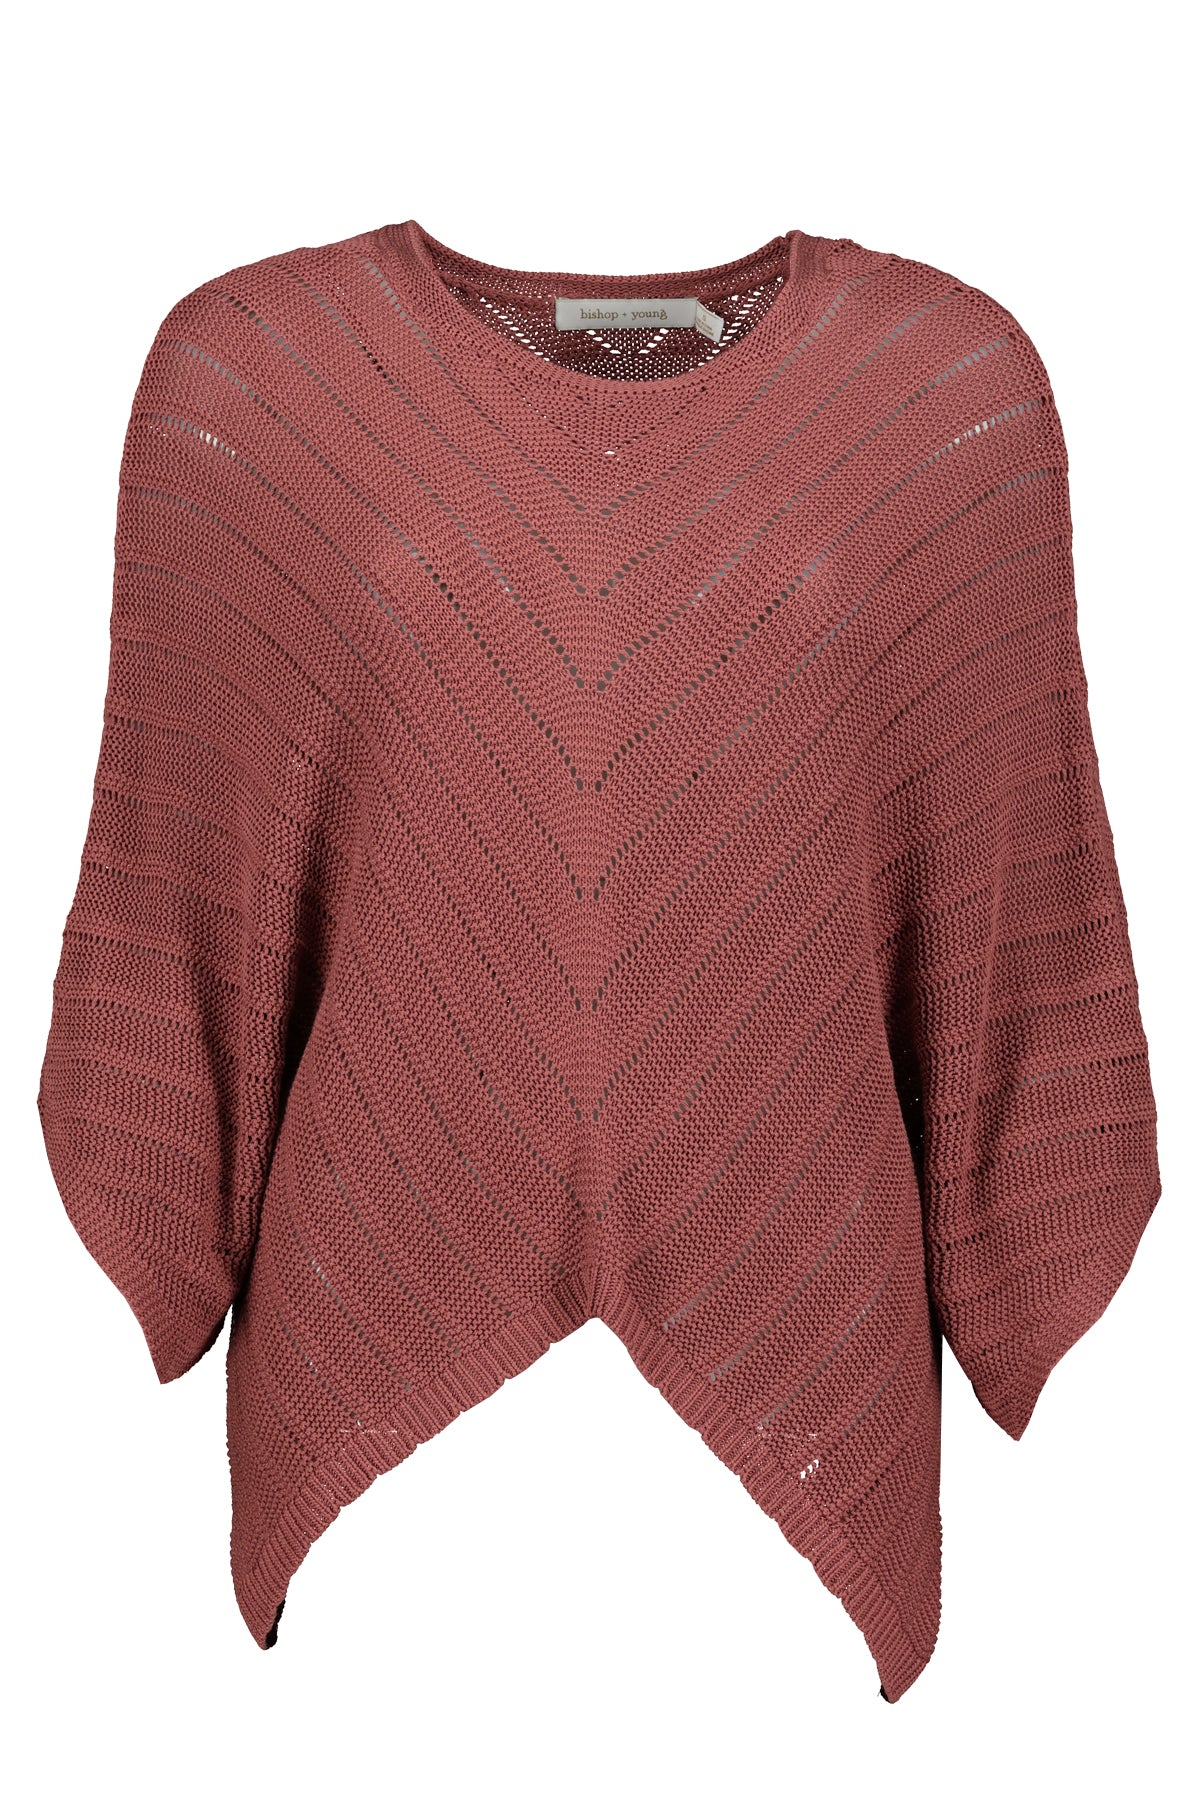 Zen Sweater